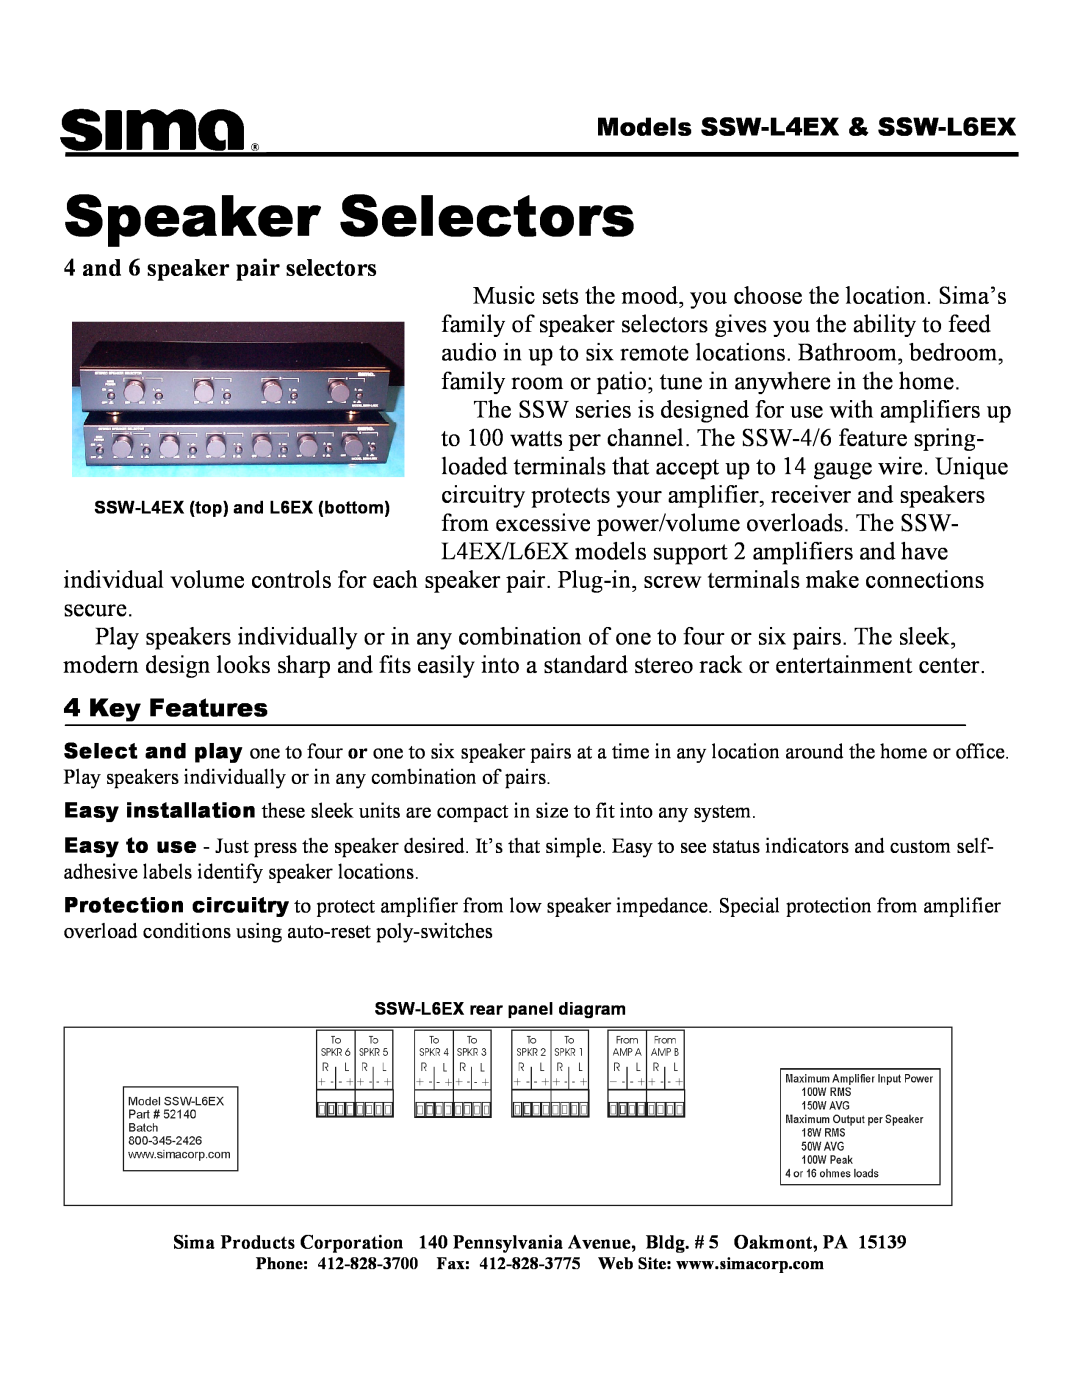 Sima Products manual Speaker Selectors, Models SSW-L4EX & SSW-L6EX, and 6 speaker pair selectors, Key Features 